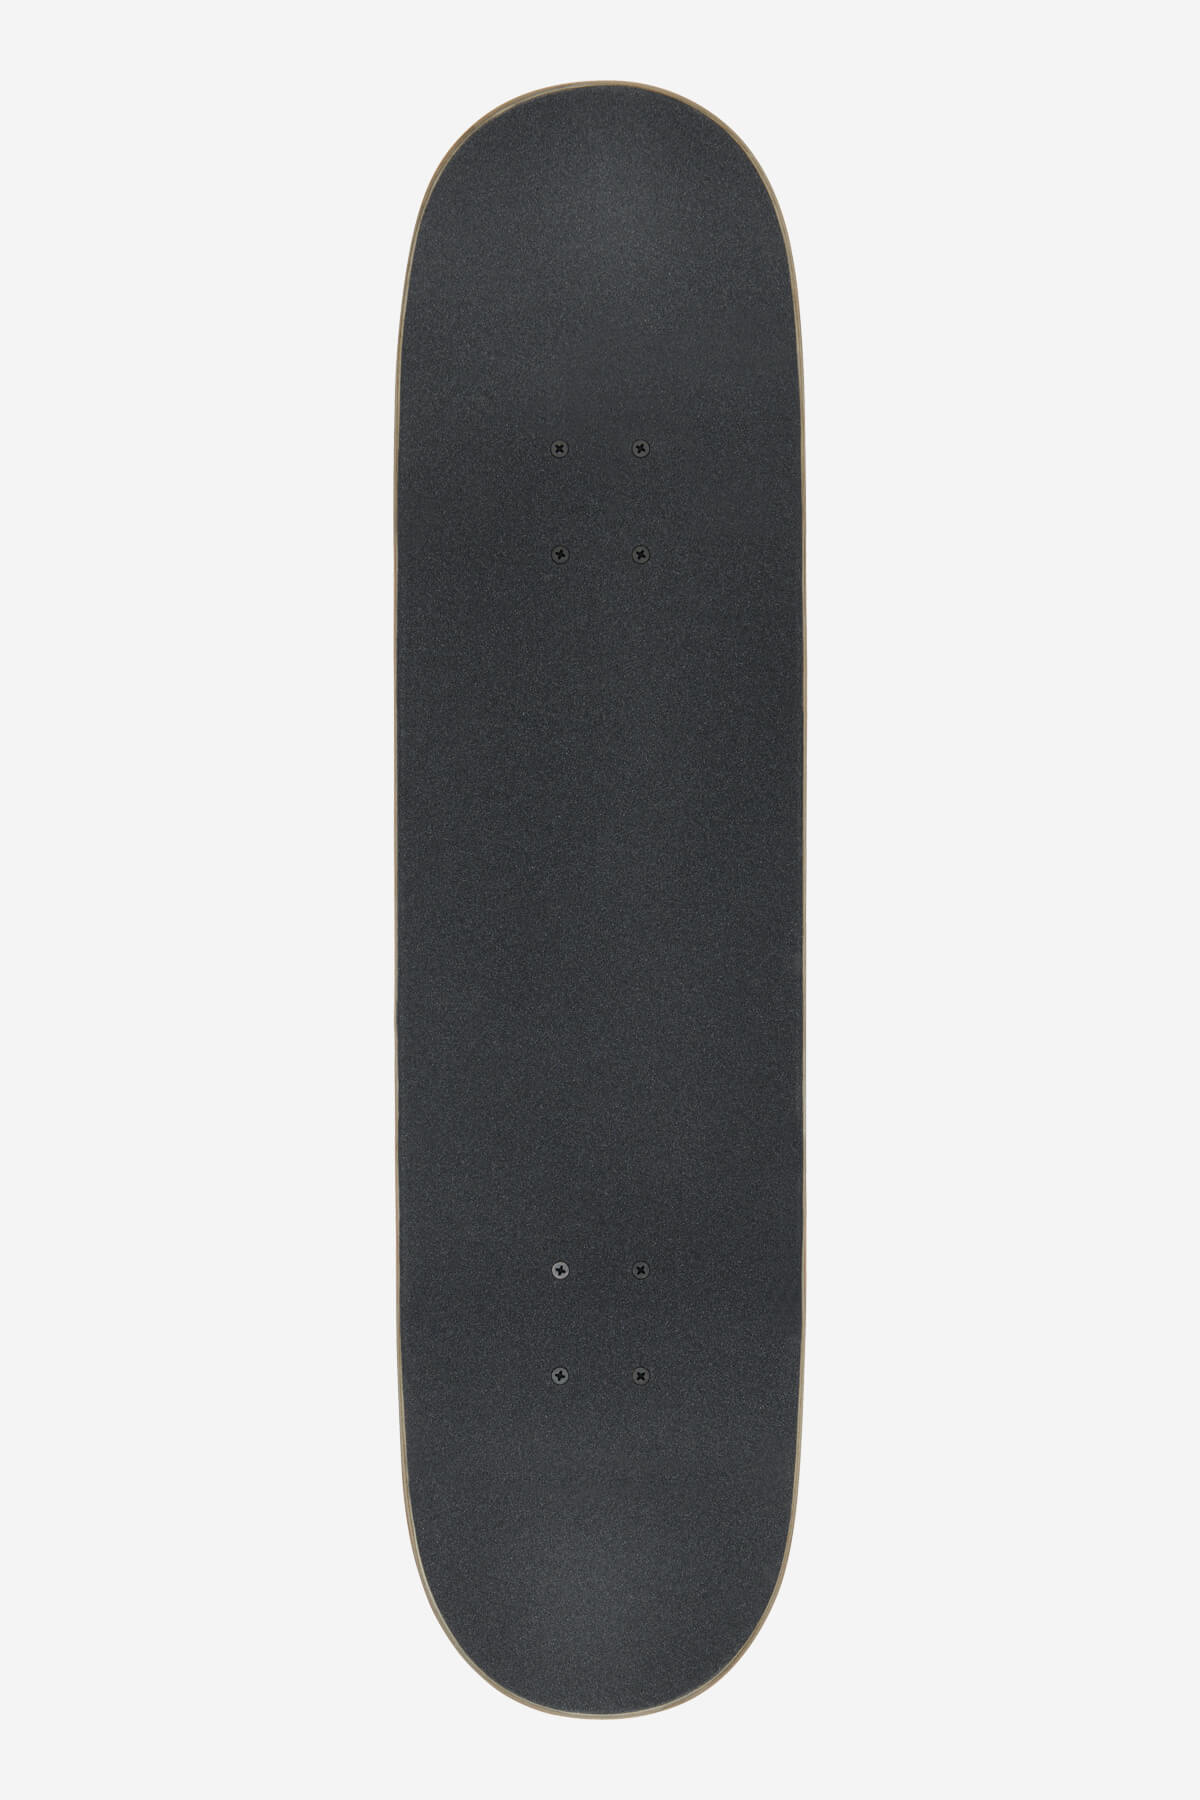 goodstock gunmetal 8.25" complete skateboard